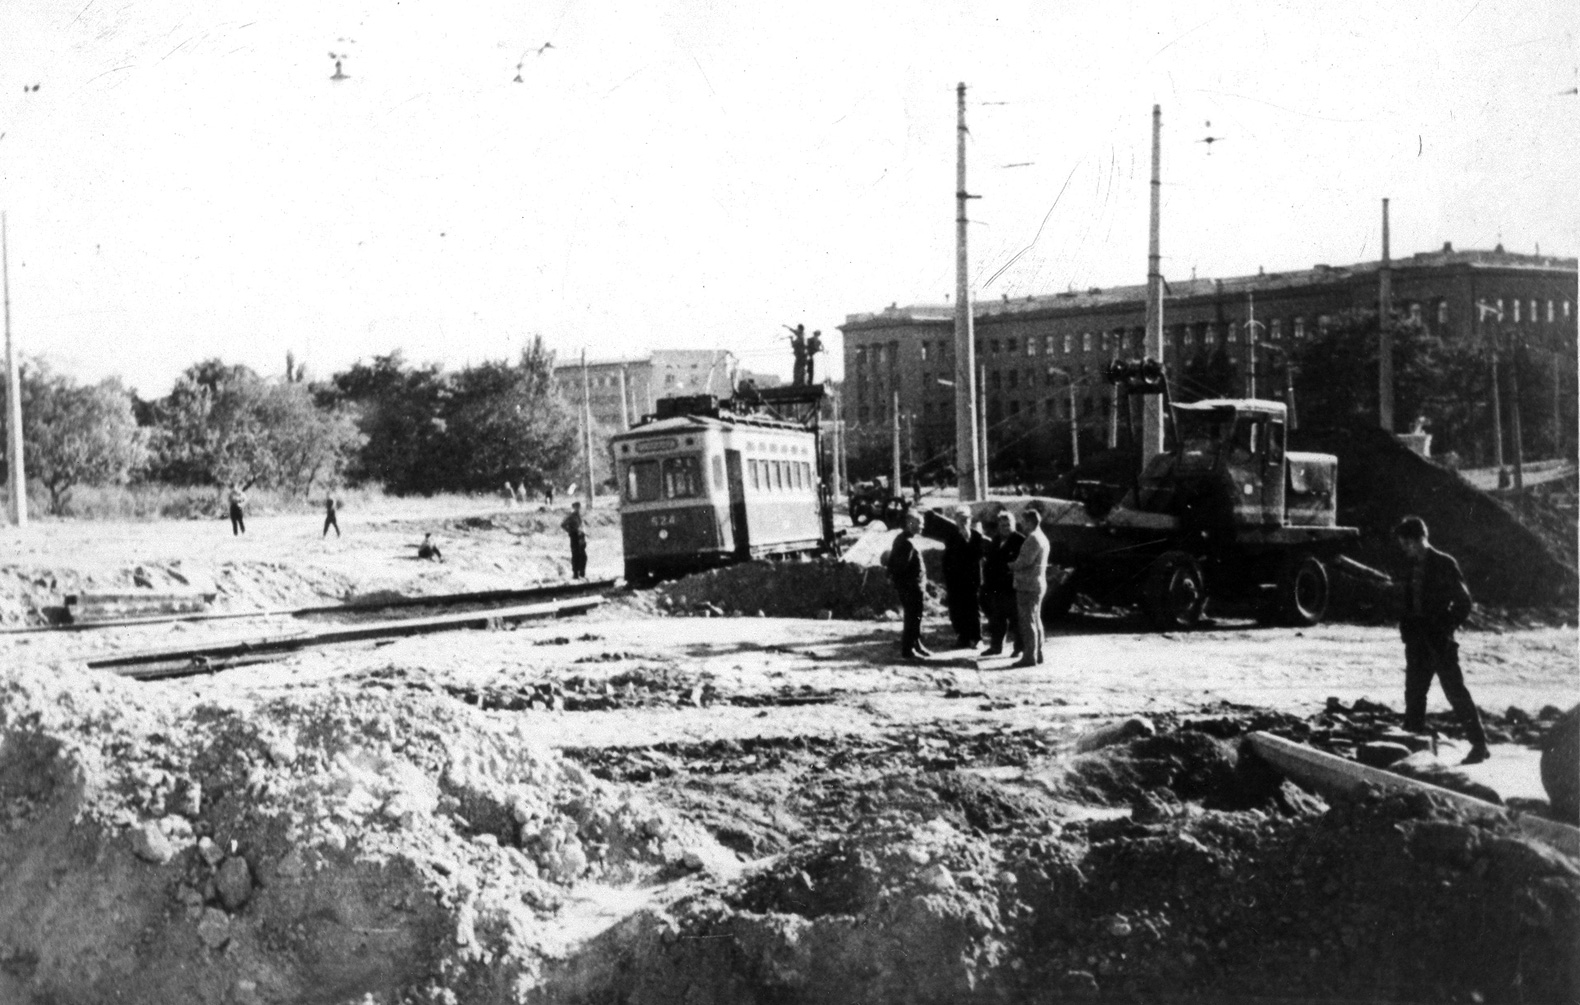 Odessza, Kolomna 2-axle motor car — 524; Odessza — Broad Gauge Reconstruction; Odessza — Old Photos: Tramway